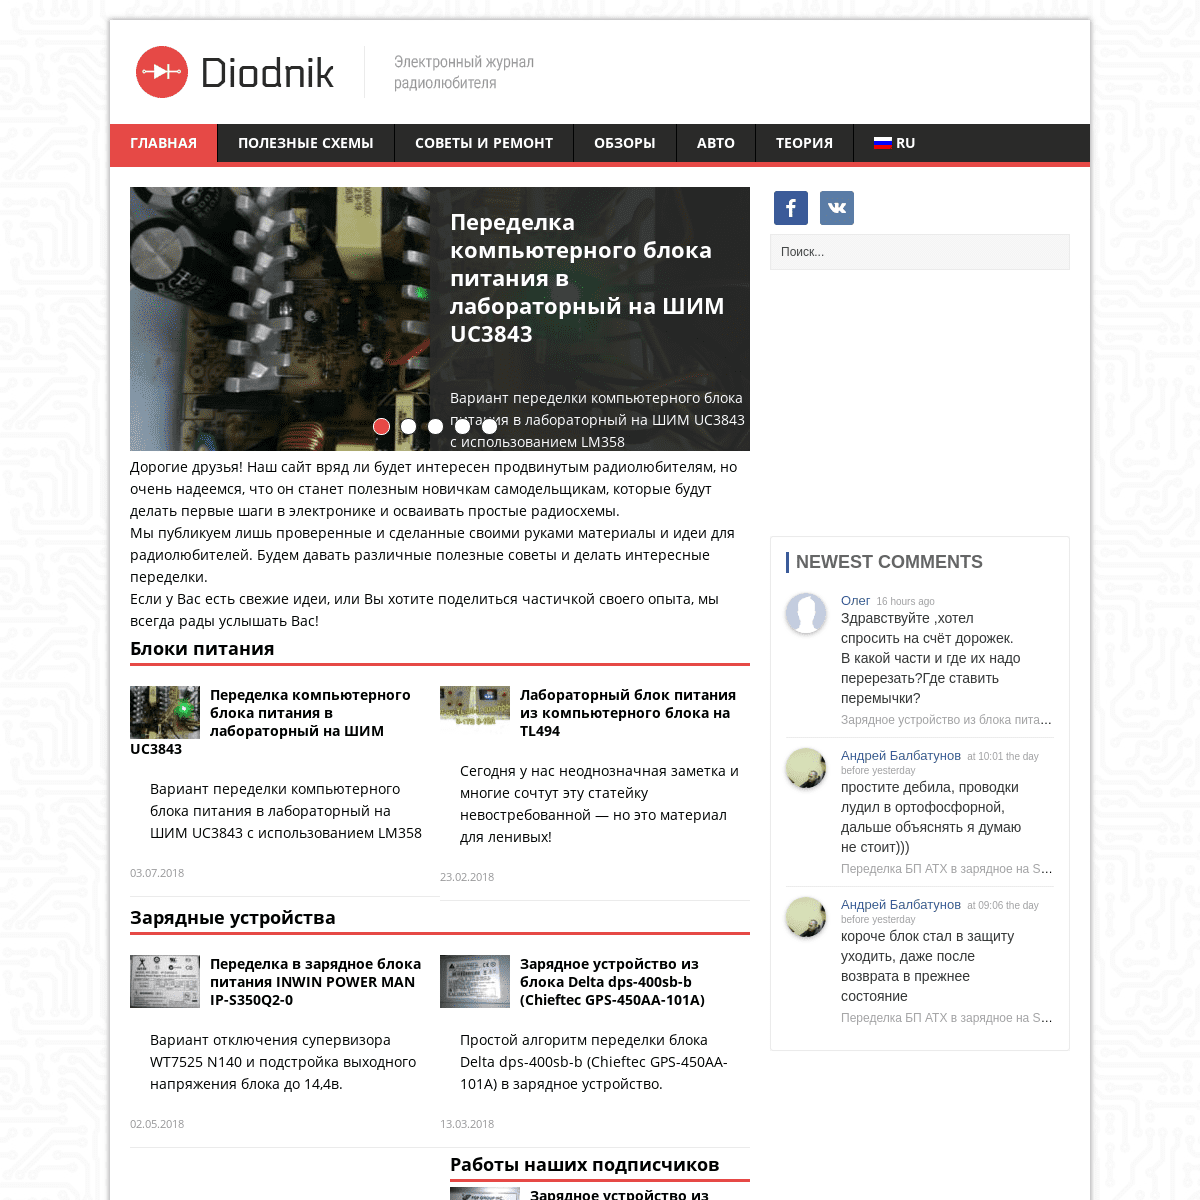 A complete backup of diodnik.com